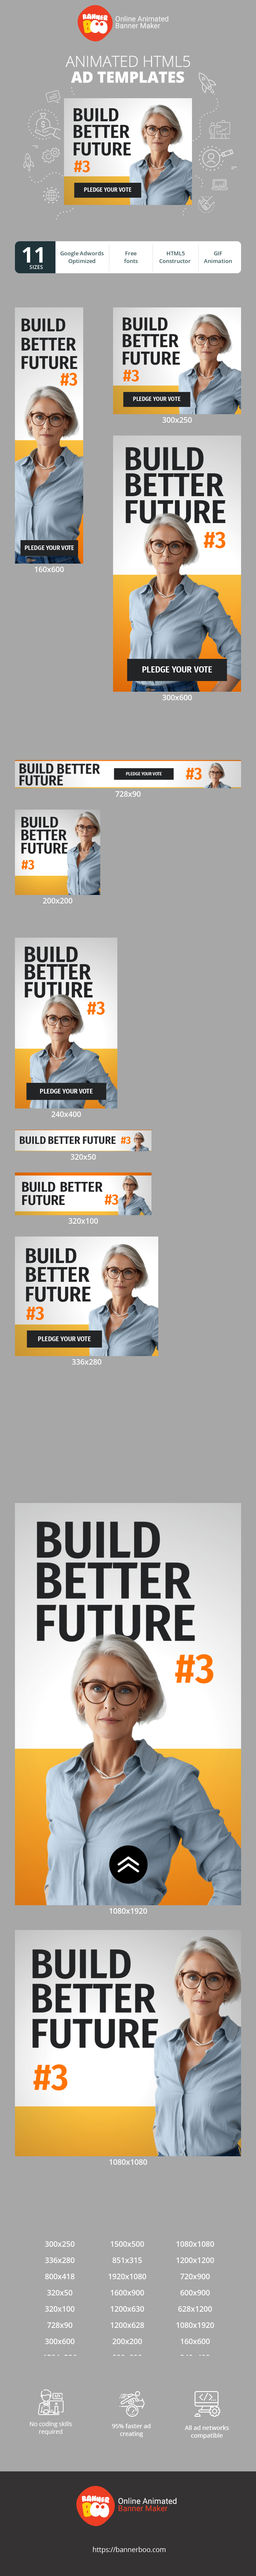 Banner ad template — Build Better Future #3 Vote For A Jenie Ravioni — Midterm Election Day